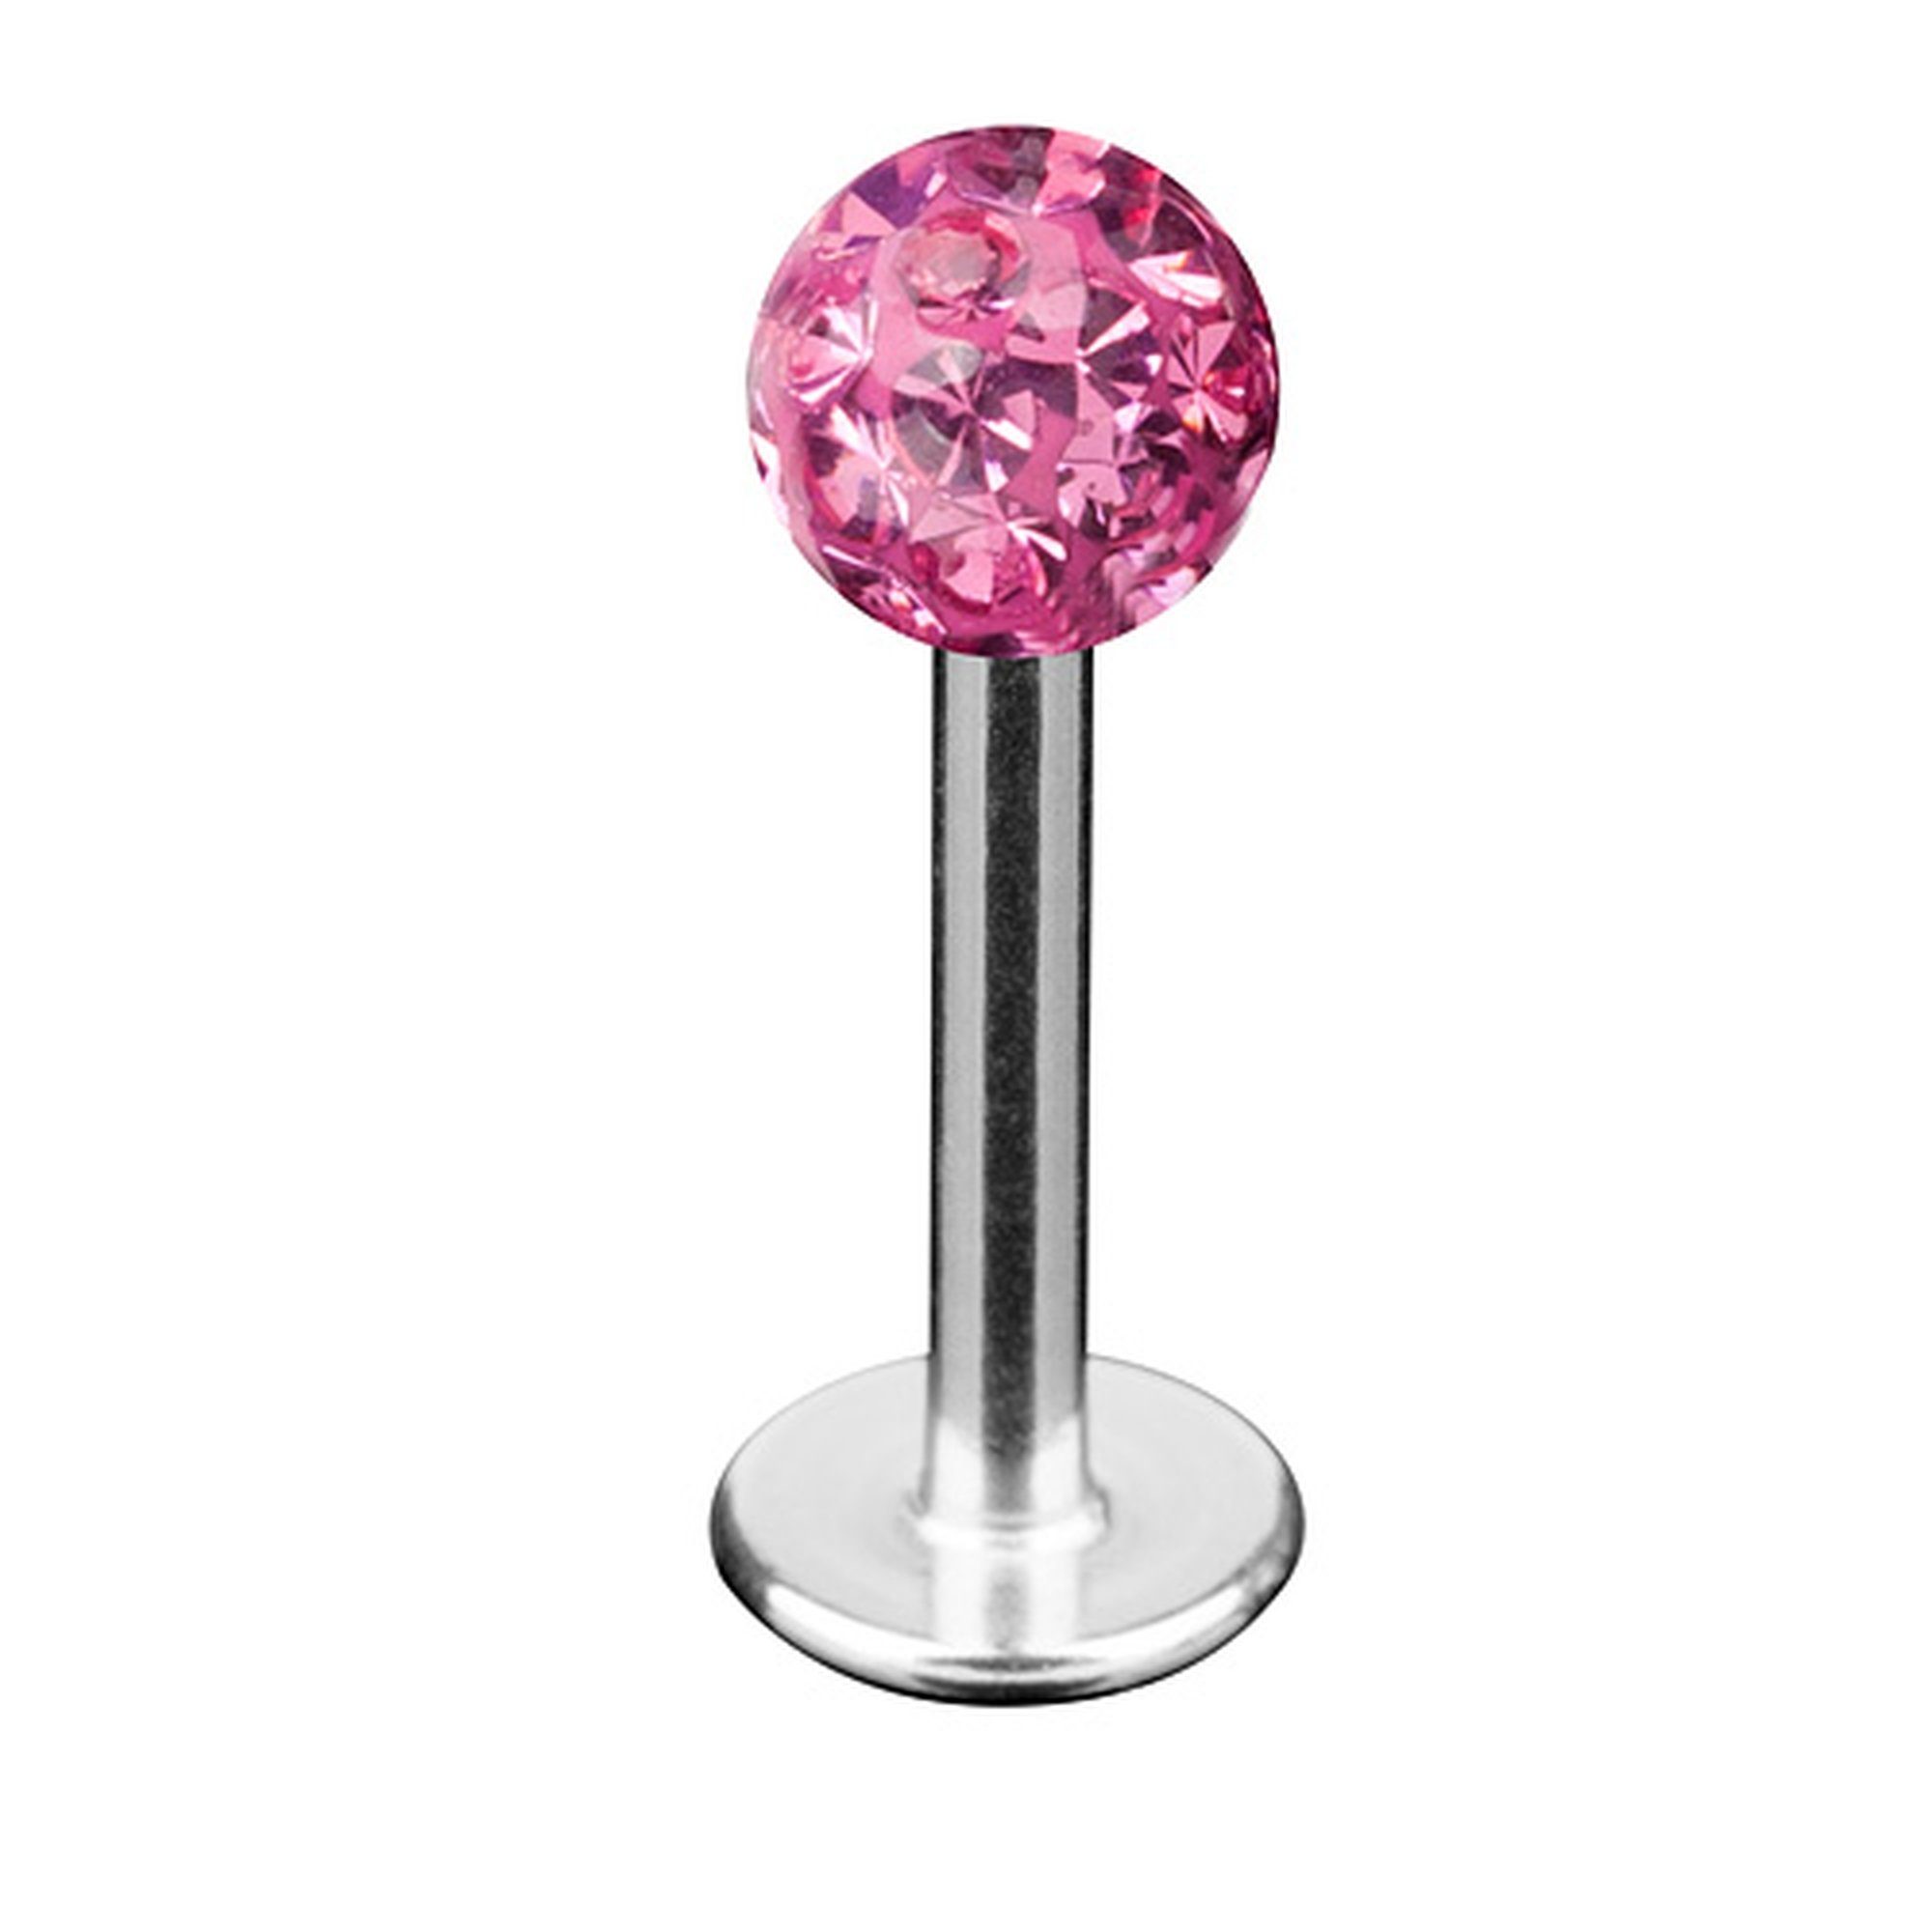 Schmuck Kugel, Ferido Labret Piercing-Set Stecker Lippenstecker Multi Labret Pink Kristall Kristall Lippenpiercing Piercing Taffstyle Ferido